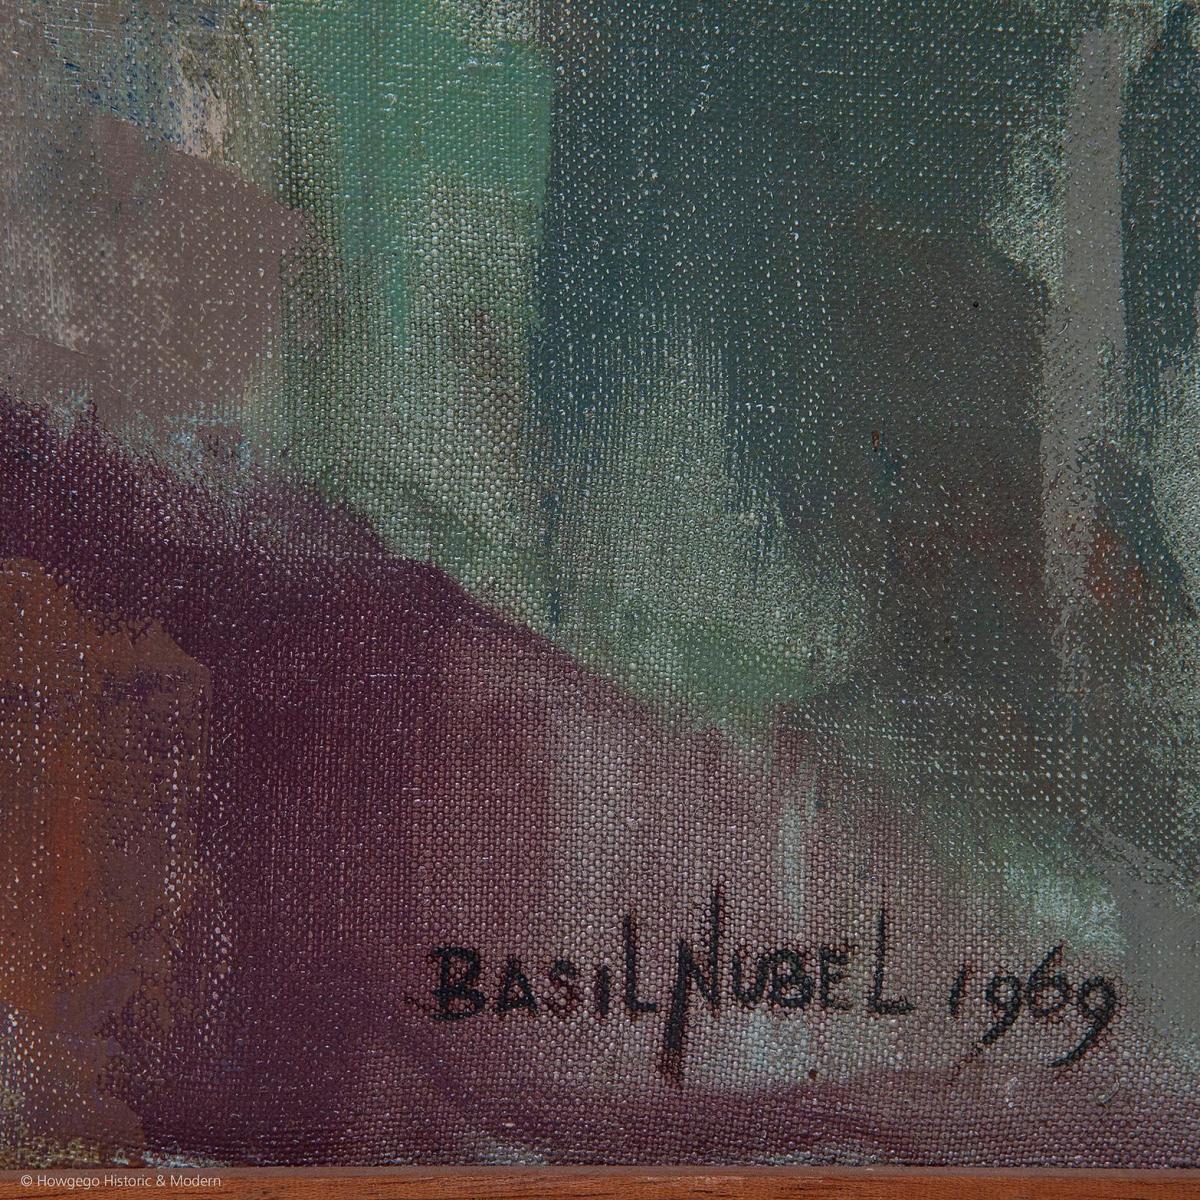 Basil Nubel, Village in the Rain